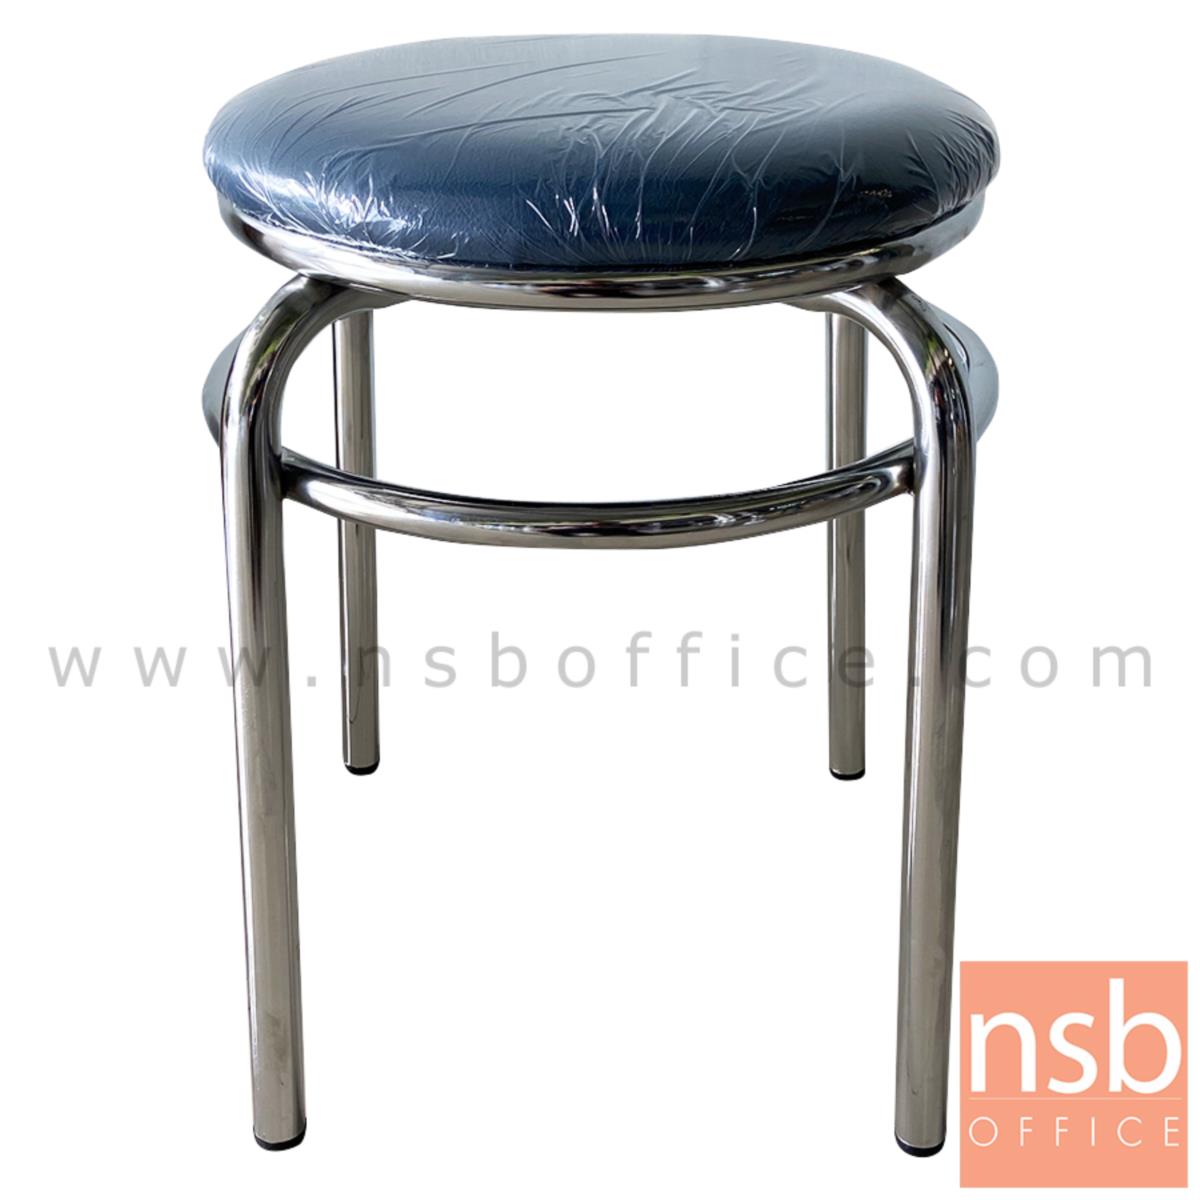 B10A086:เก้าอี้สตูลกลมใหญ่ ที่นั่งเบาะหนังเทียม twin ring ขาเหล็ก 